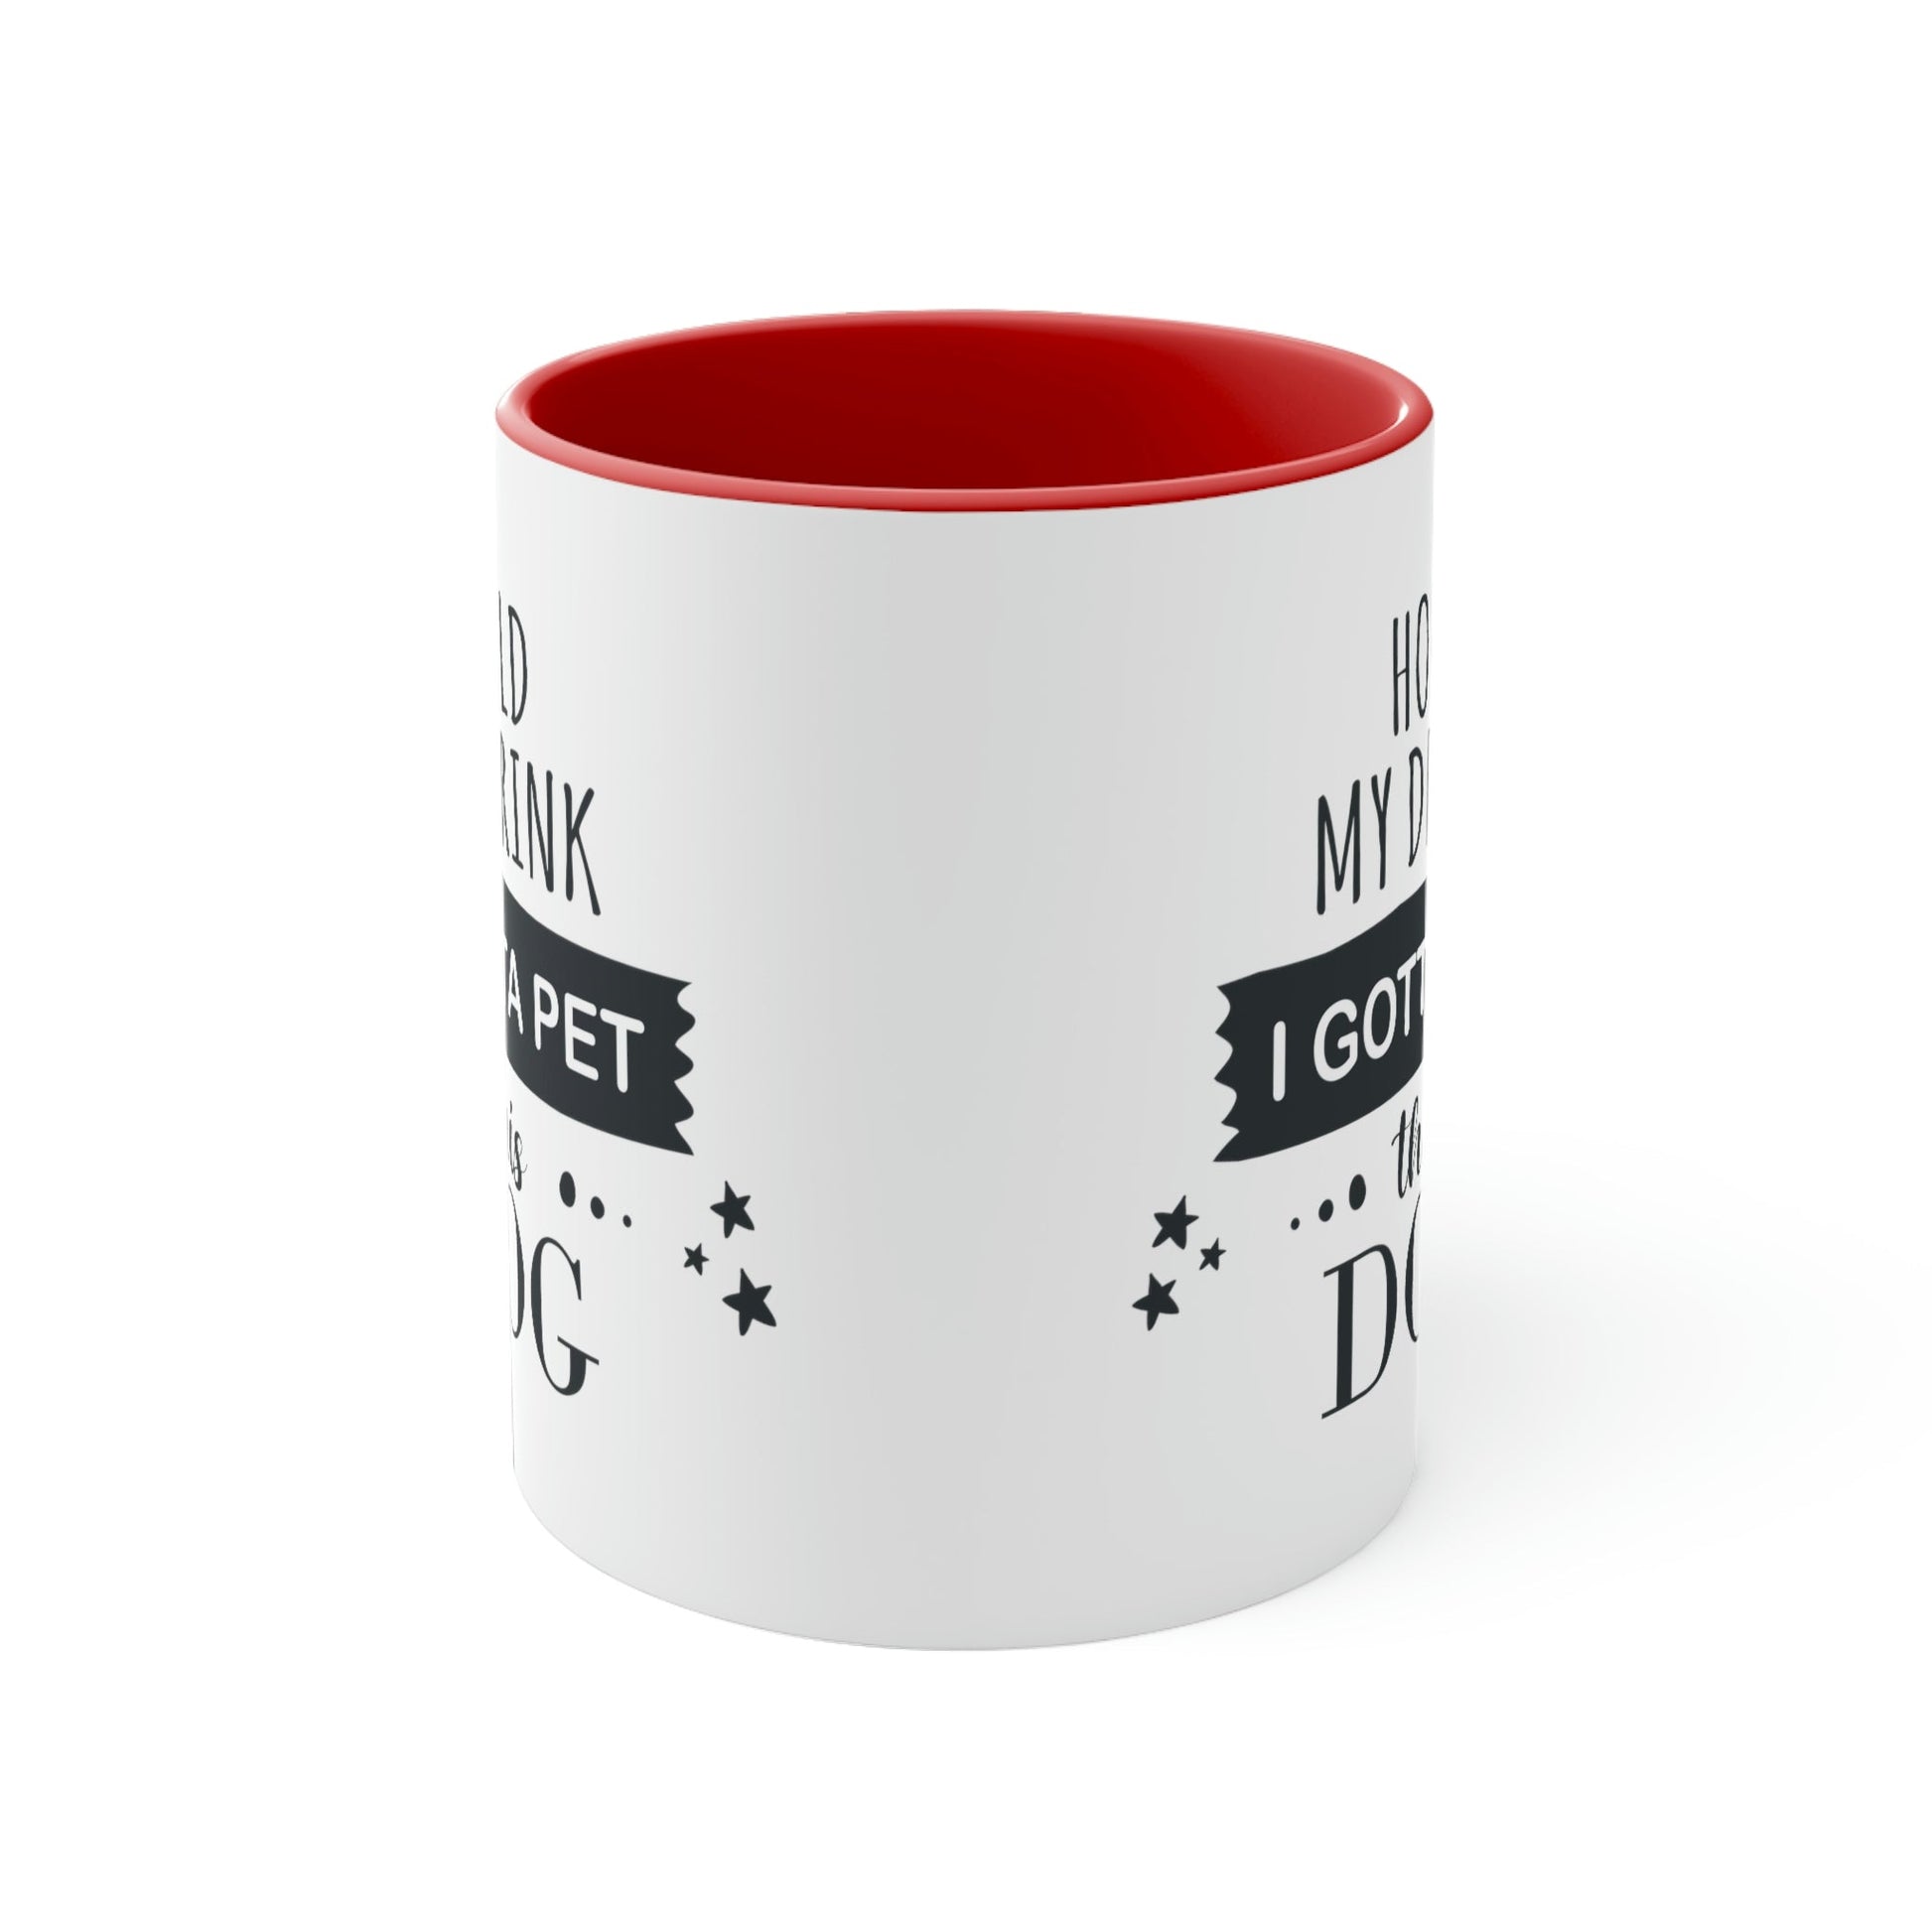 Hold My Drink I Gotta Pet Dog Accent Coffee Mug 11oz Ichaku [Perfect Gifts Selection]